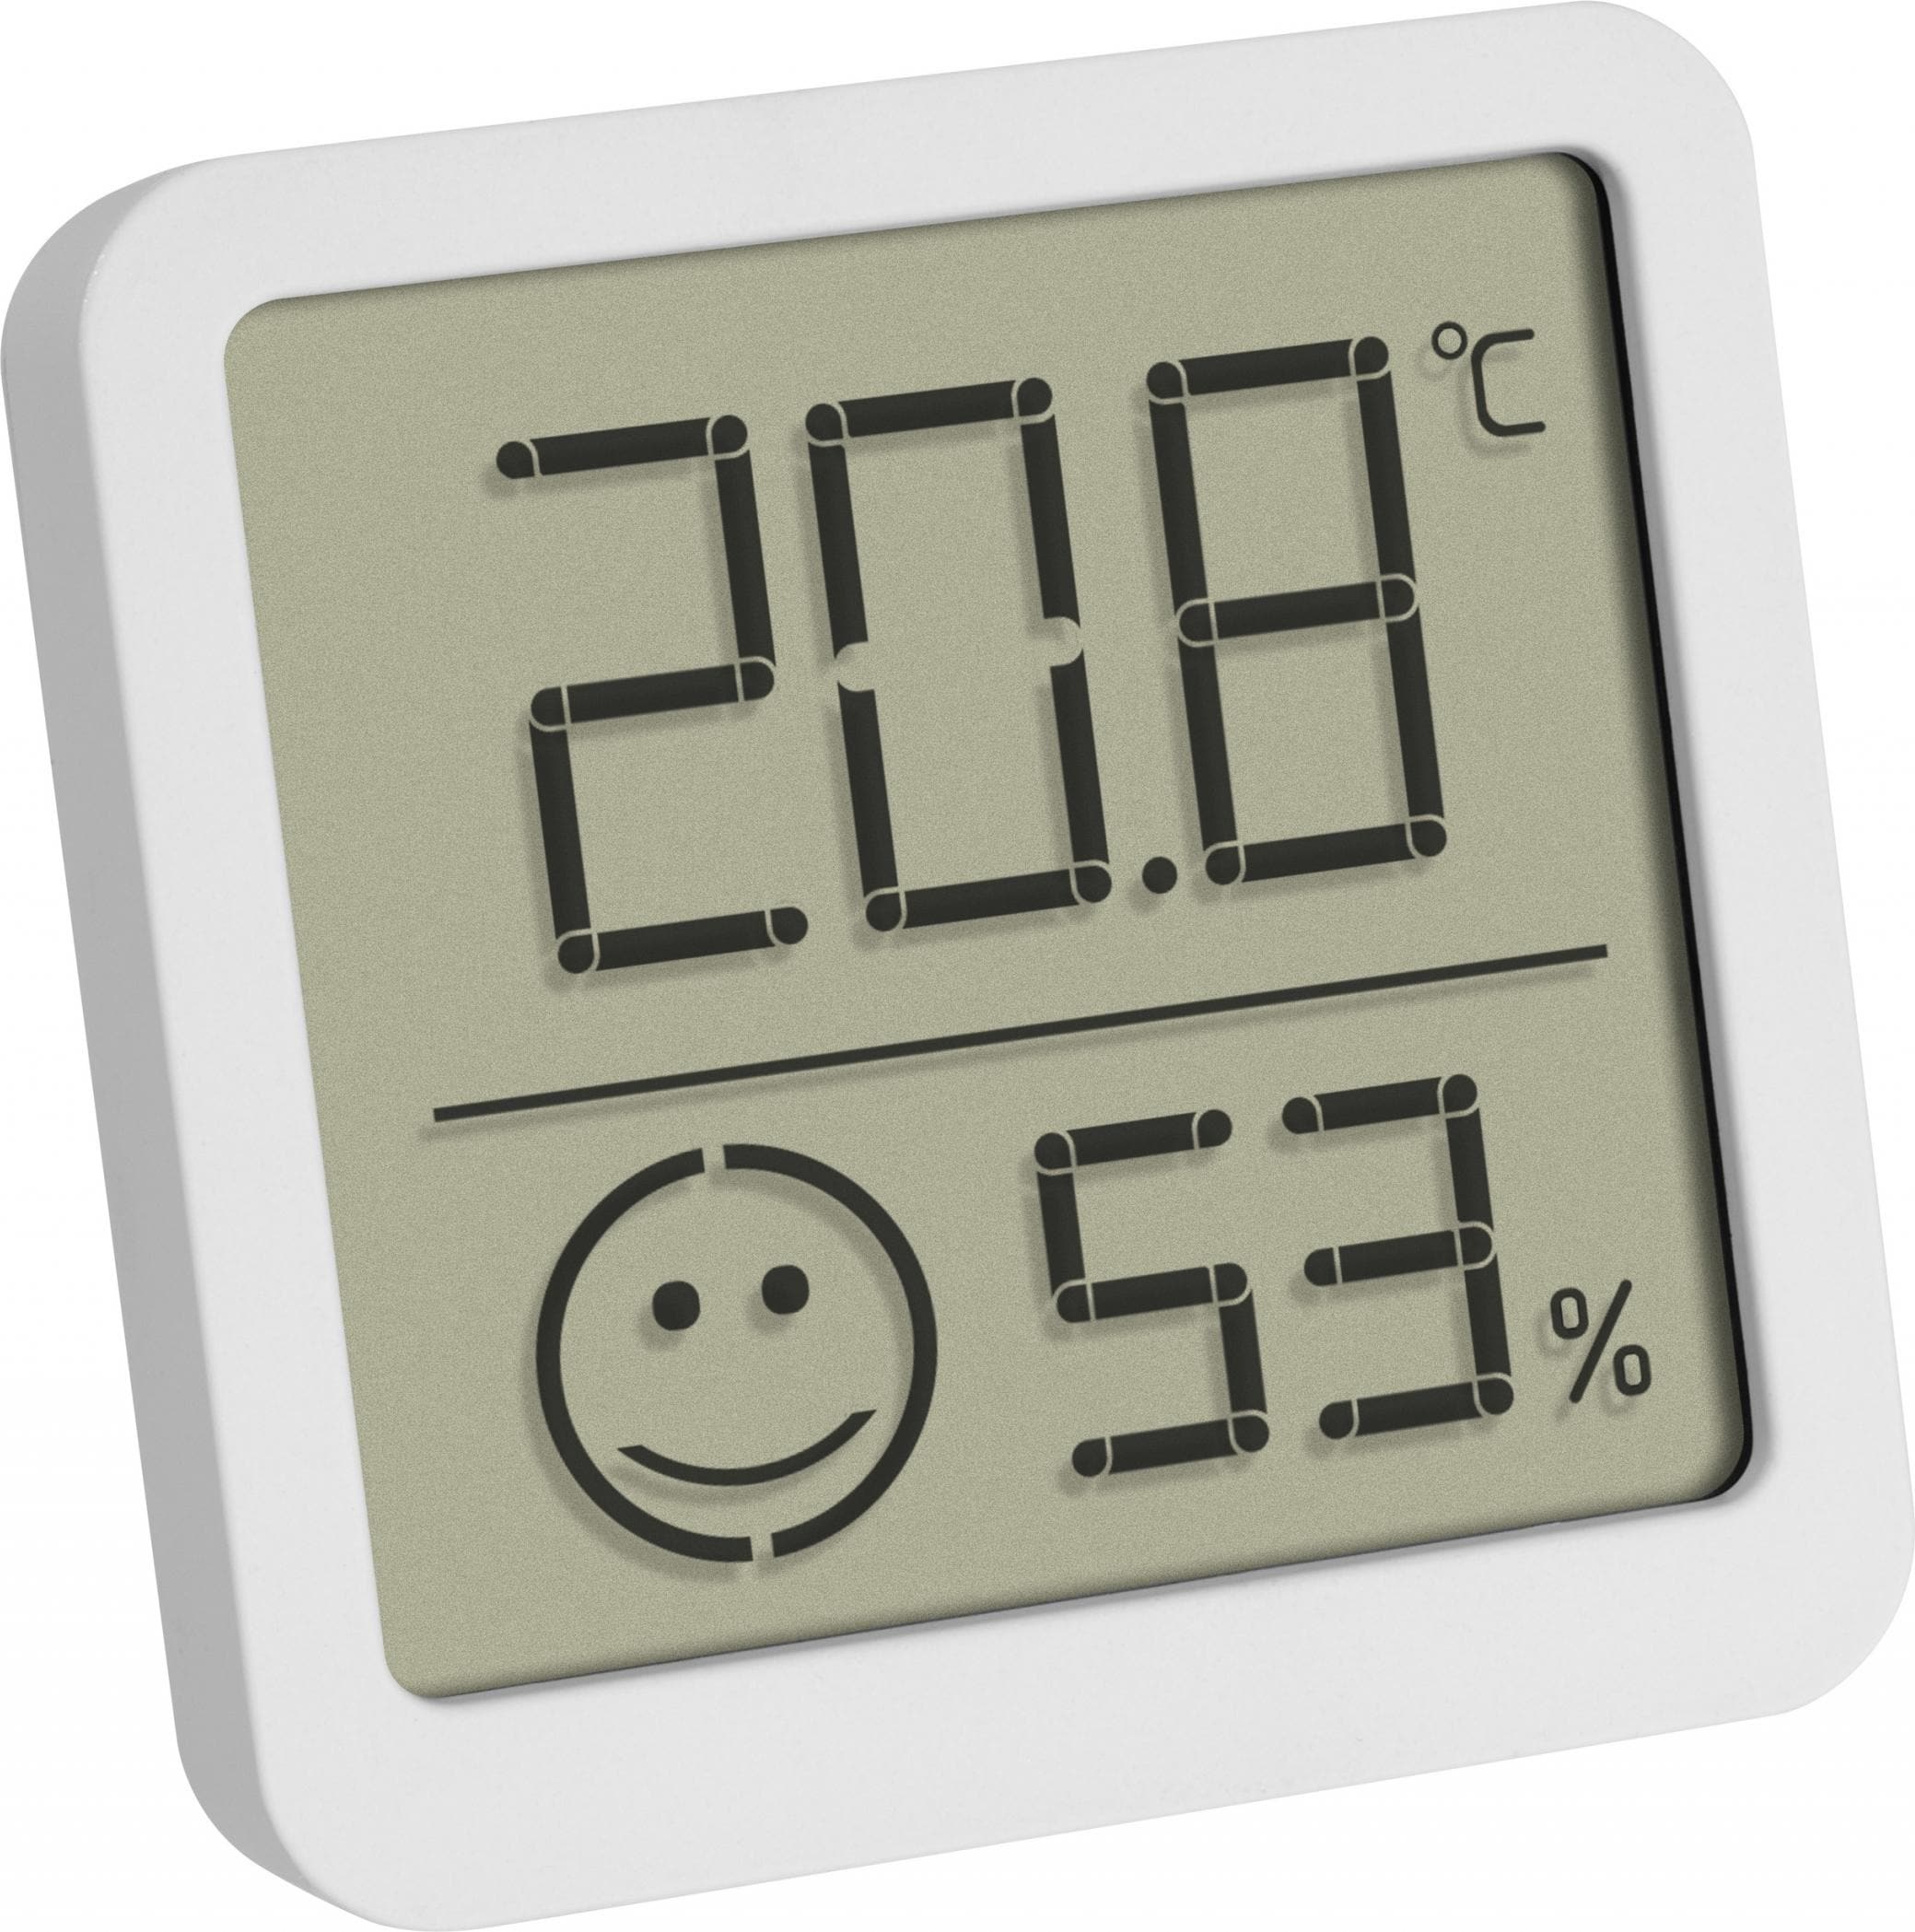 TFA Digitales Thermo-Hygrometer mit Komfortzone Thermo-/Hygrometer Weiß, Thermometer + Hygrometer, Weiss